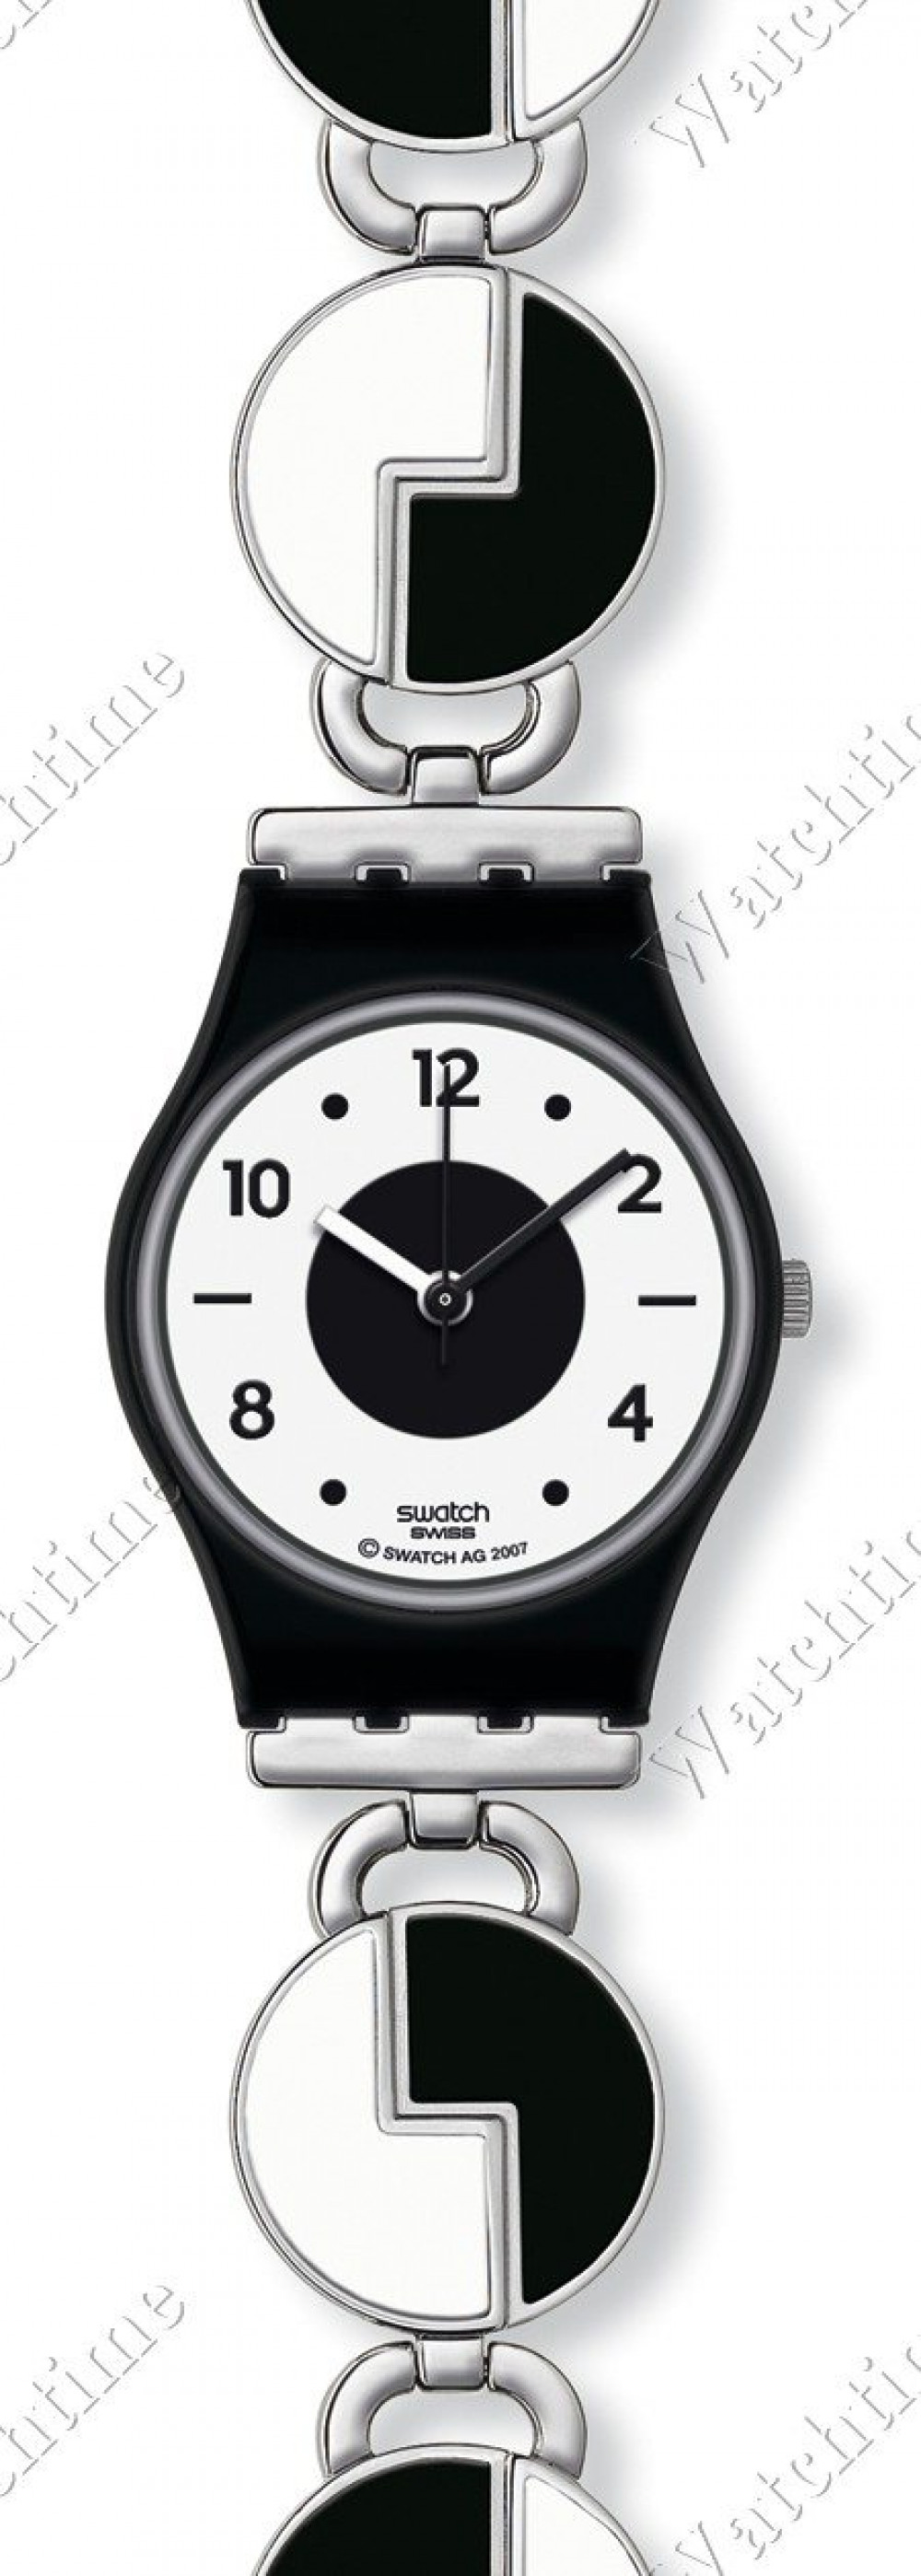 Zegarek firmy Swatch, model Shifting Black